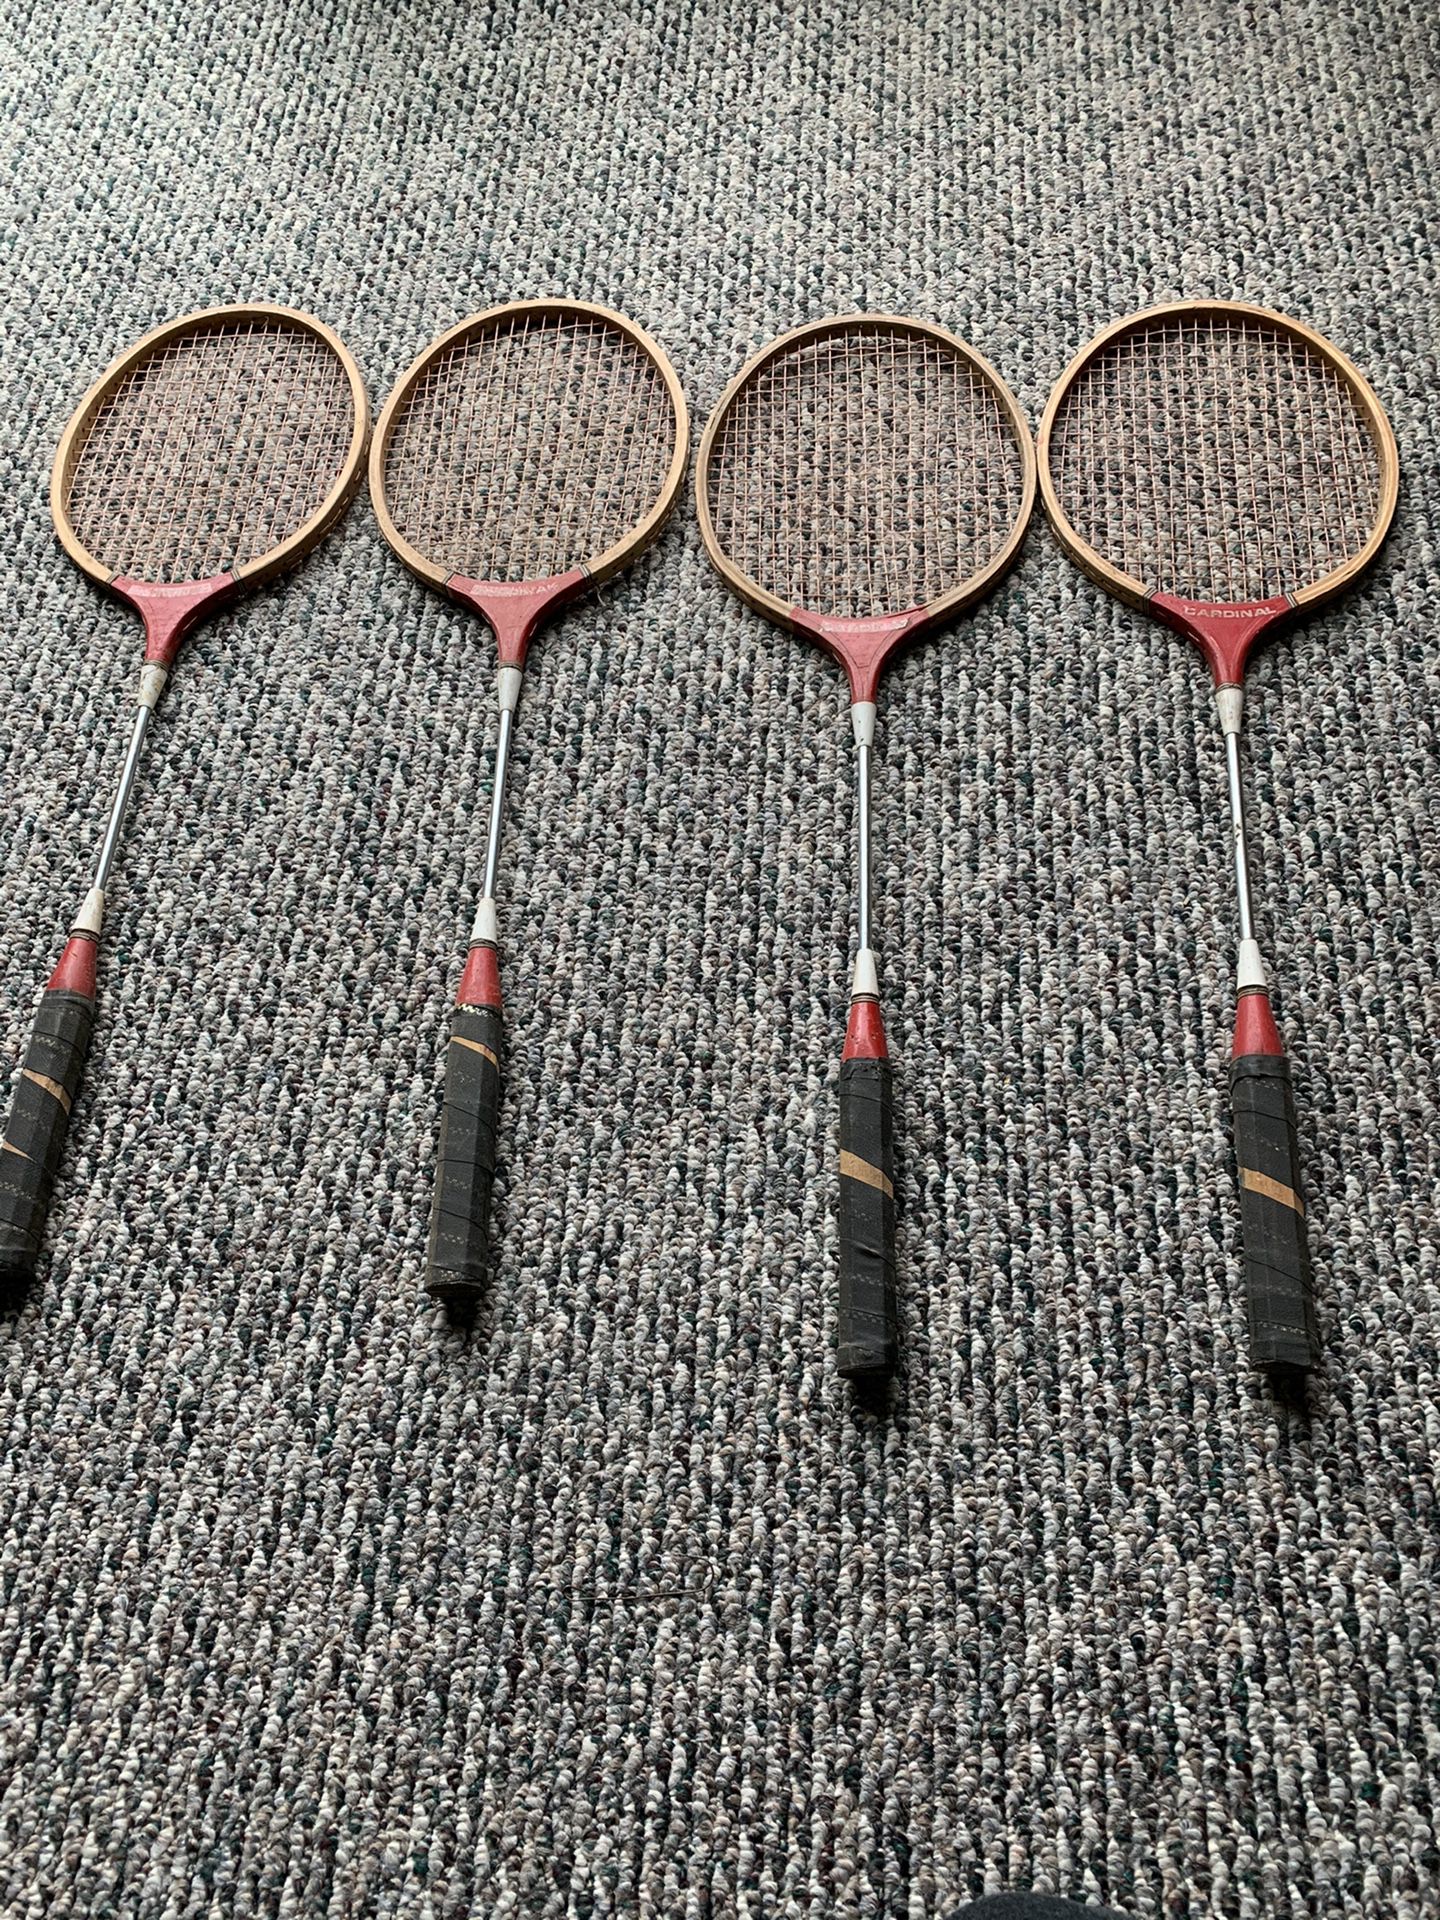 Badmitten racquets (4)